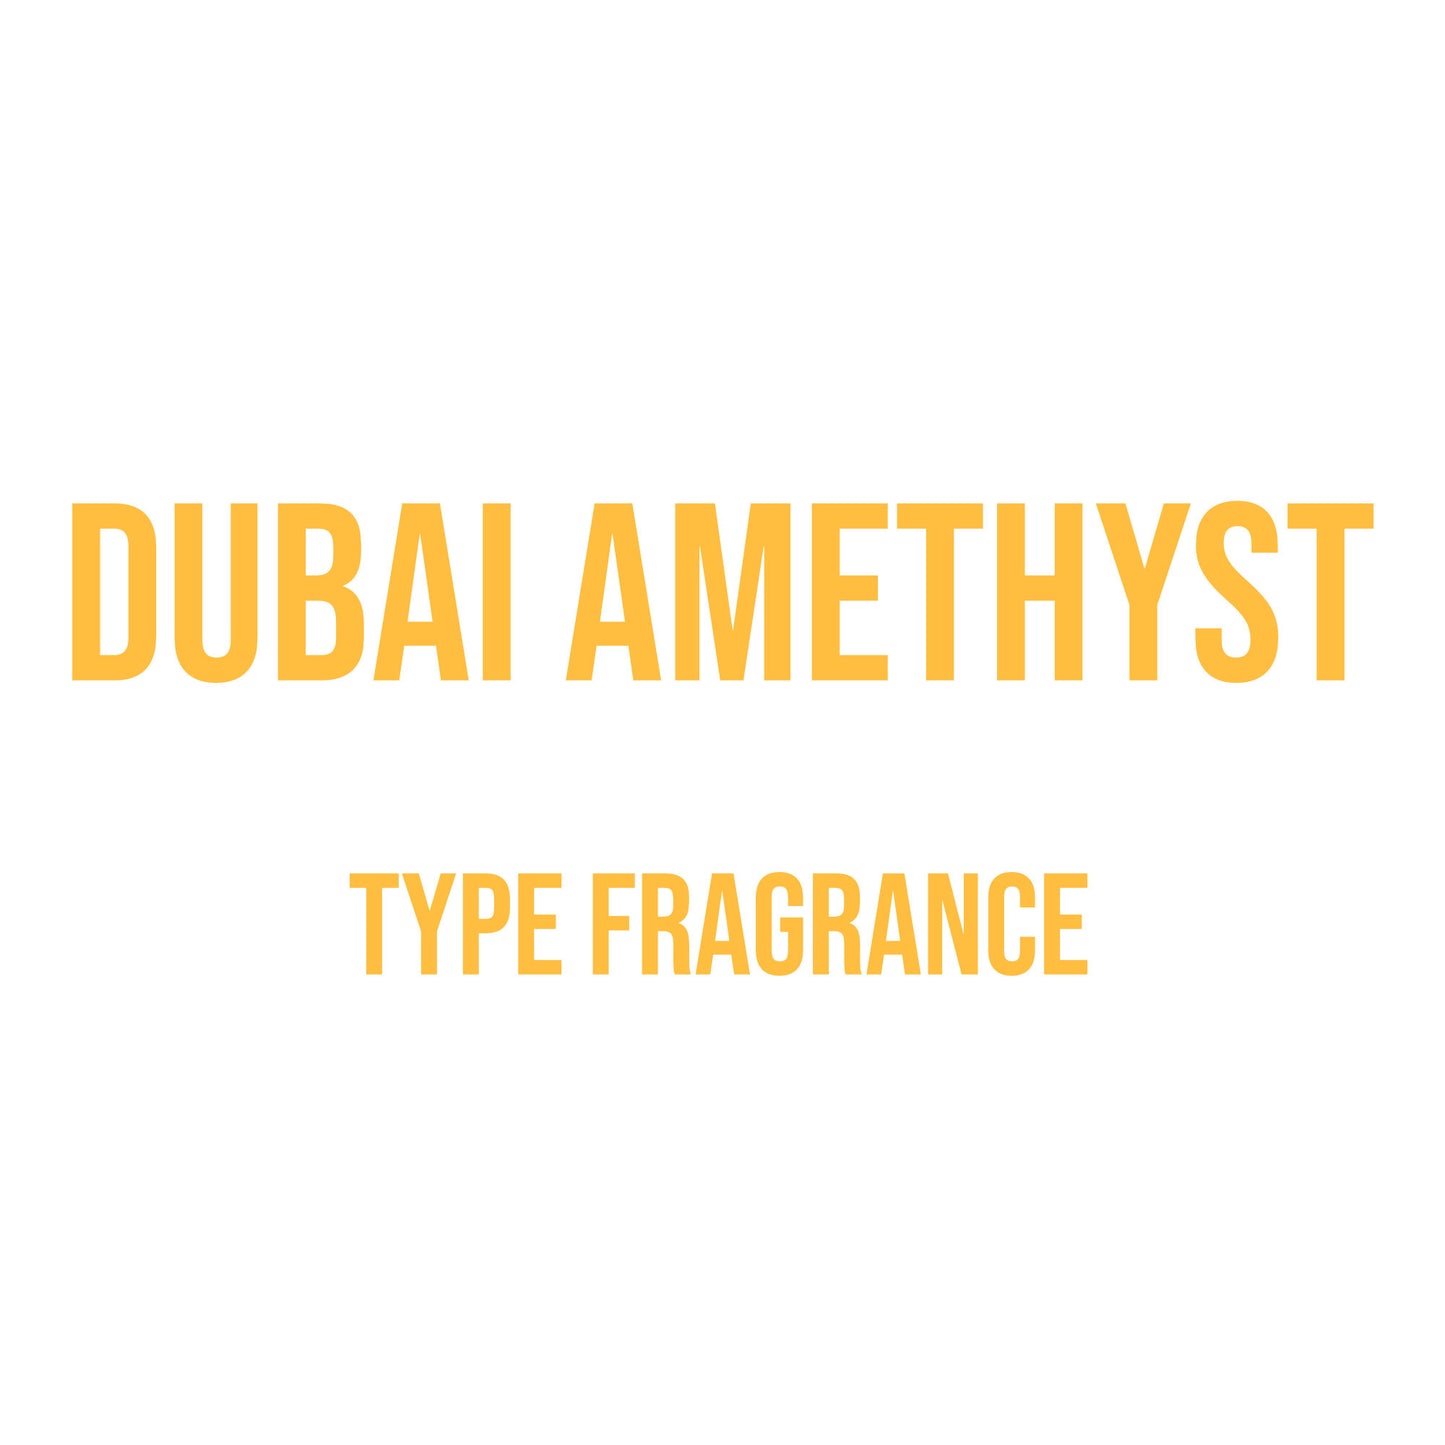 Dubai Amethyst Type Fragrance